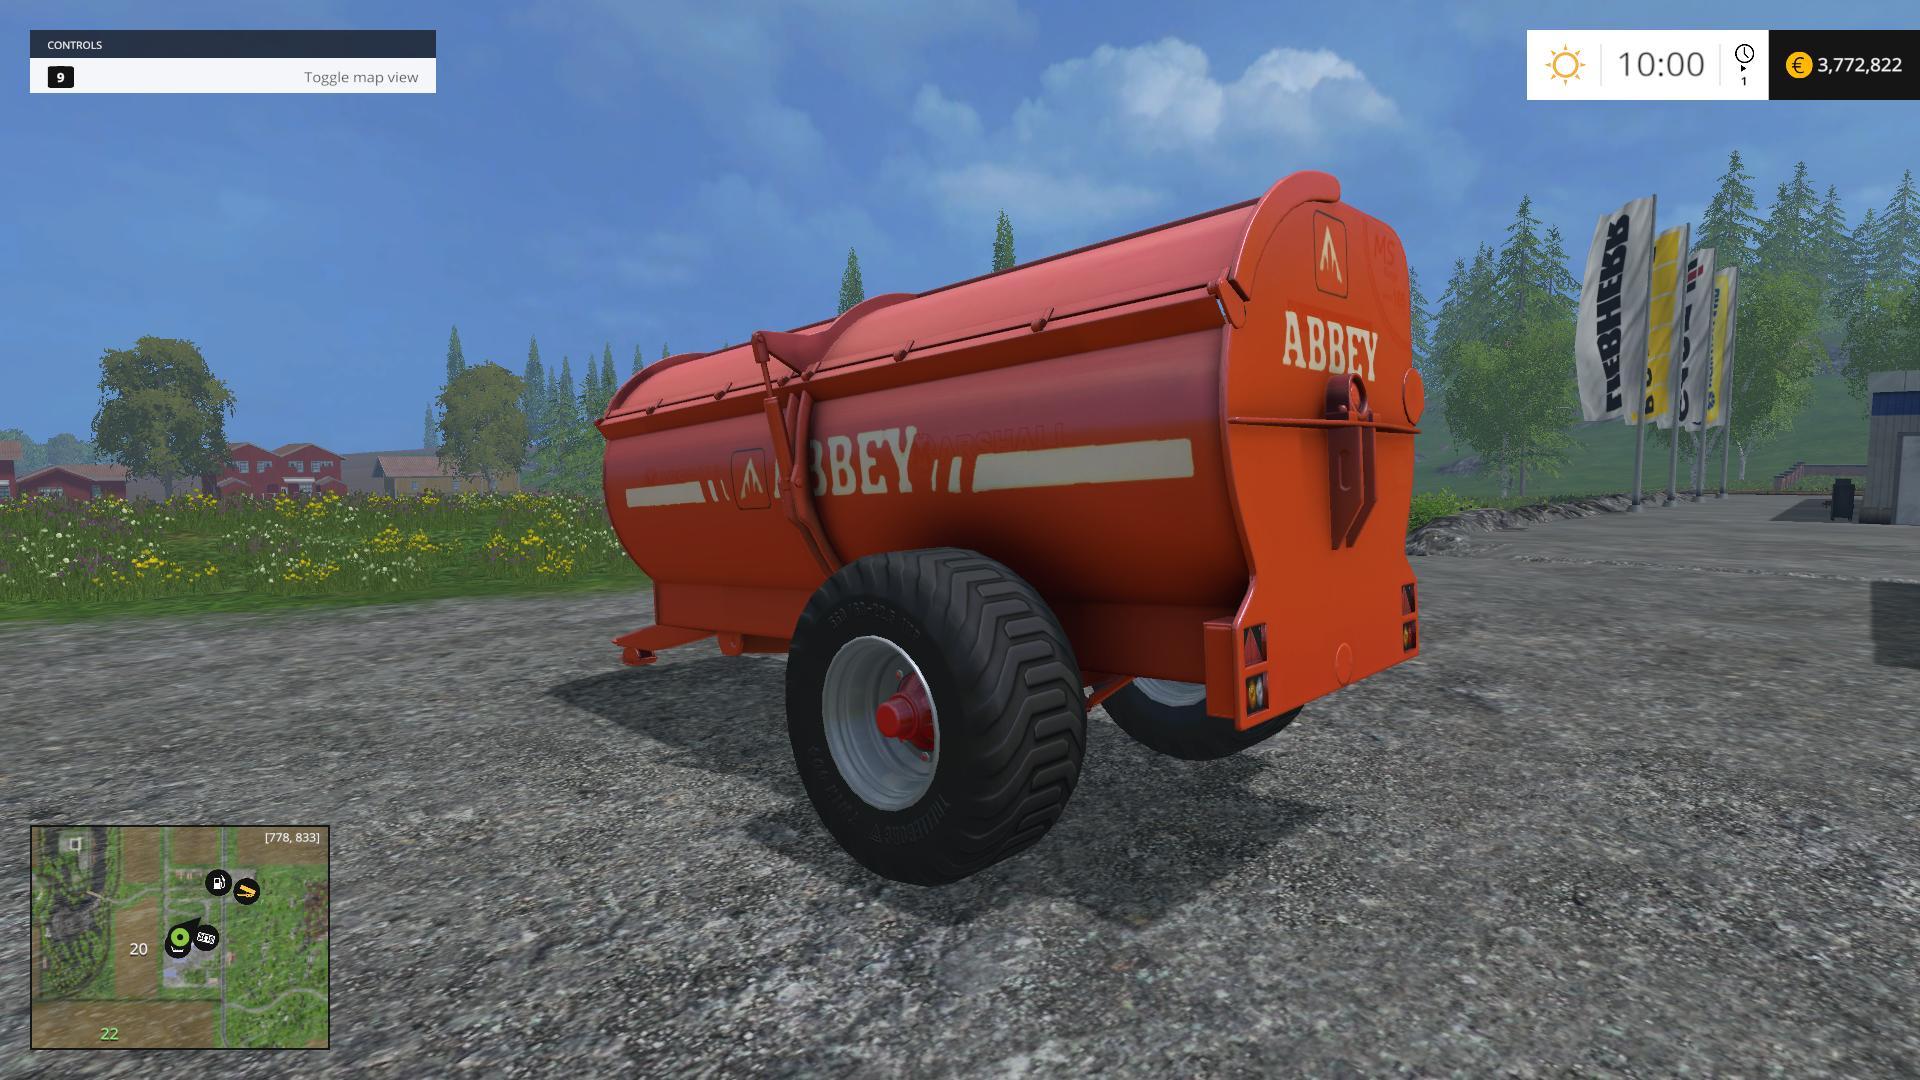 Abbey Manure Spreader V1 • Farming Simulator 19 17 22 Mods Fs19 17 22 Mods 3531